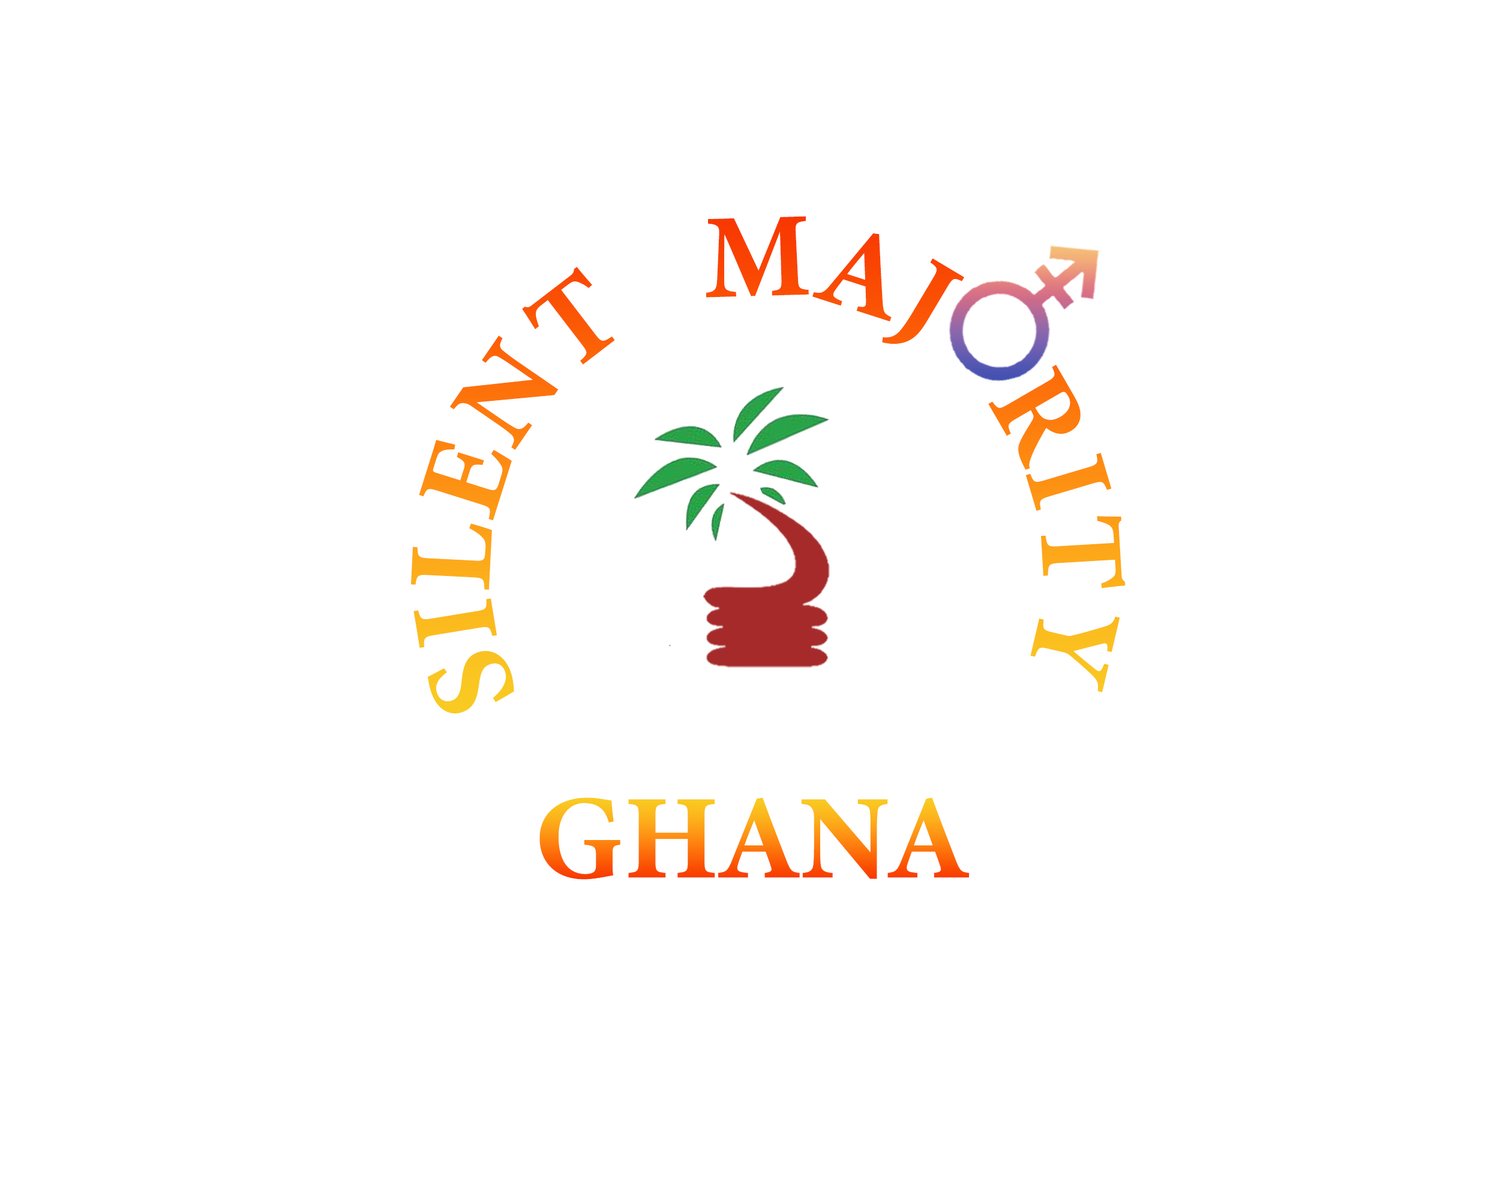 Silent Majority, Ghana